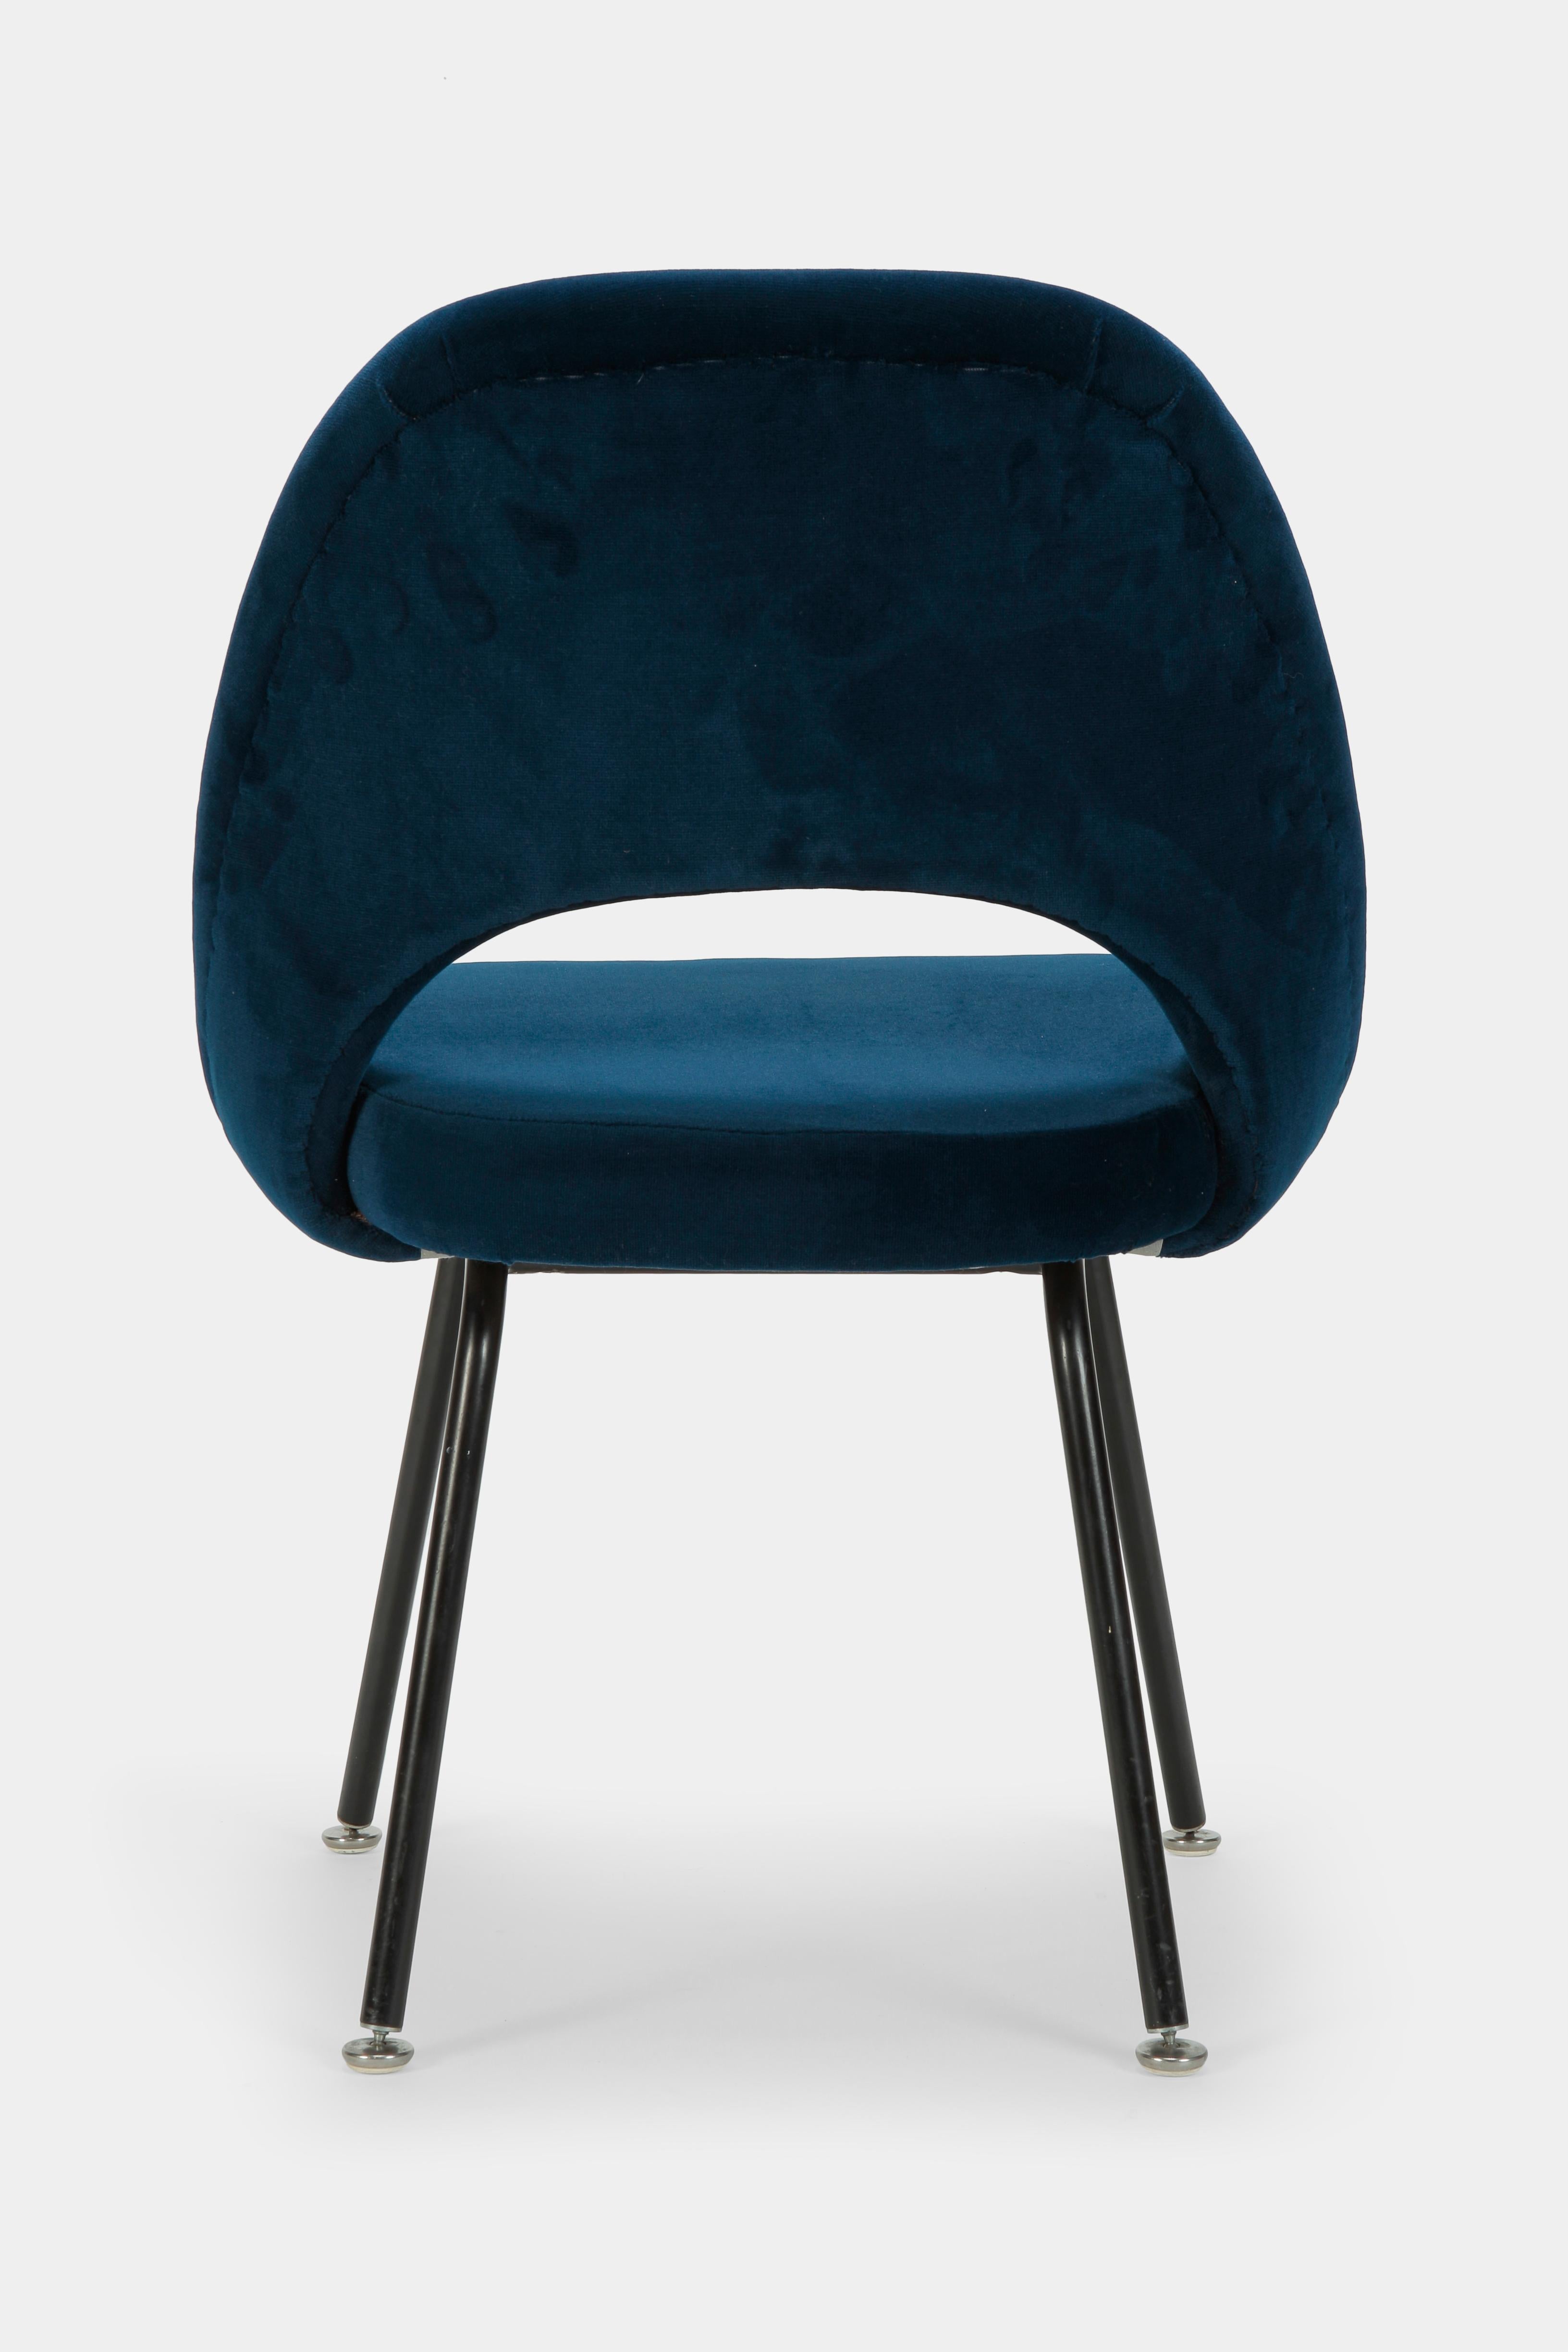 Mid-20th Century Eero Saarinen Chair Model 72 Knoll International, 1950s